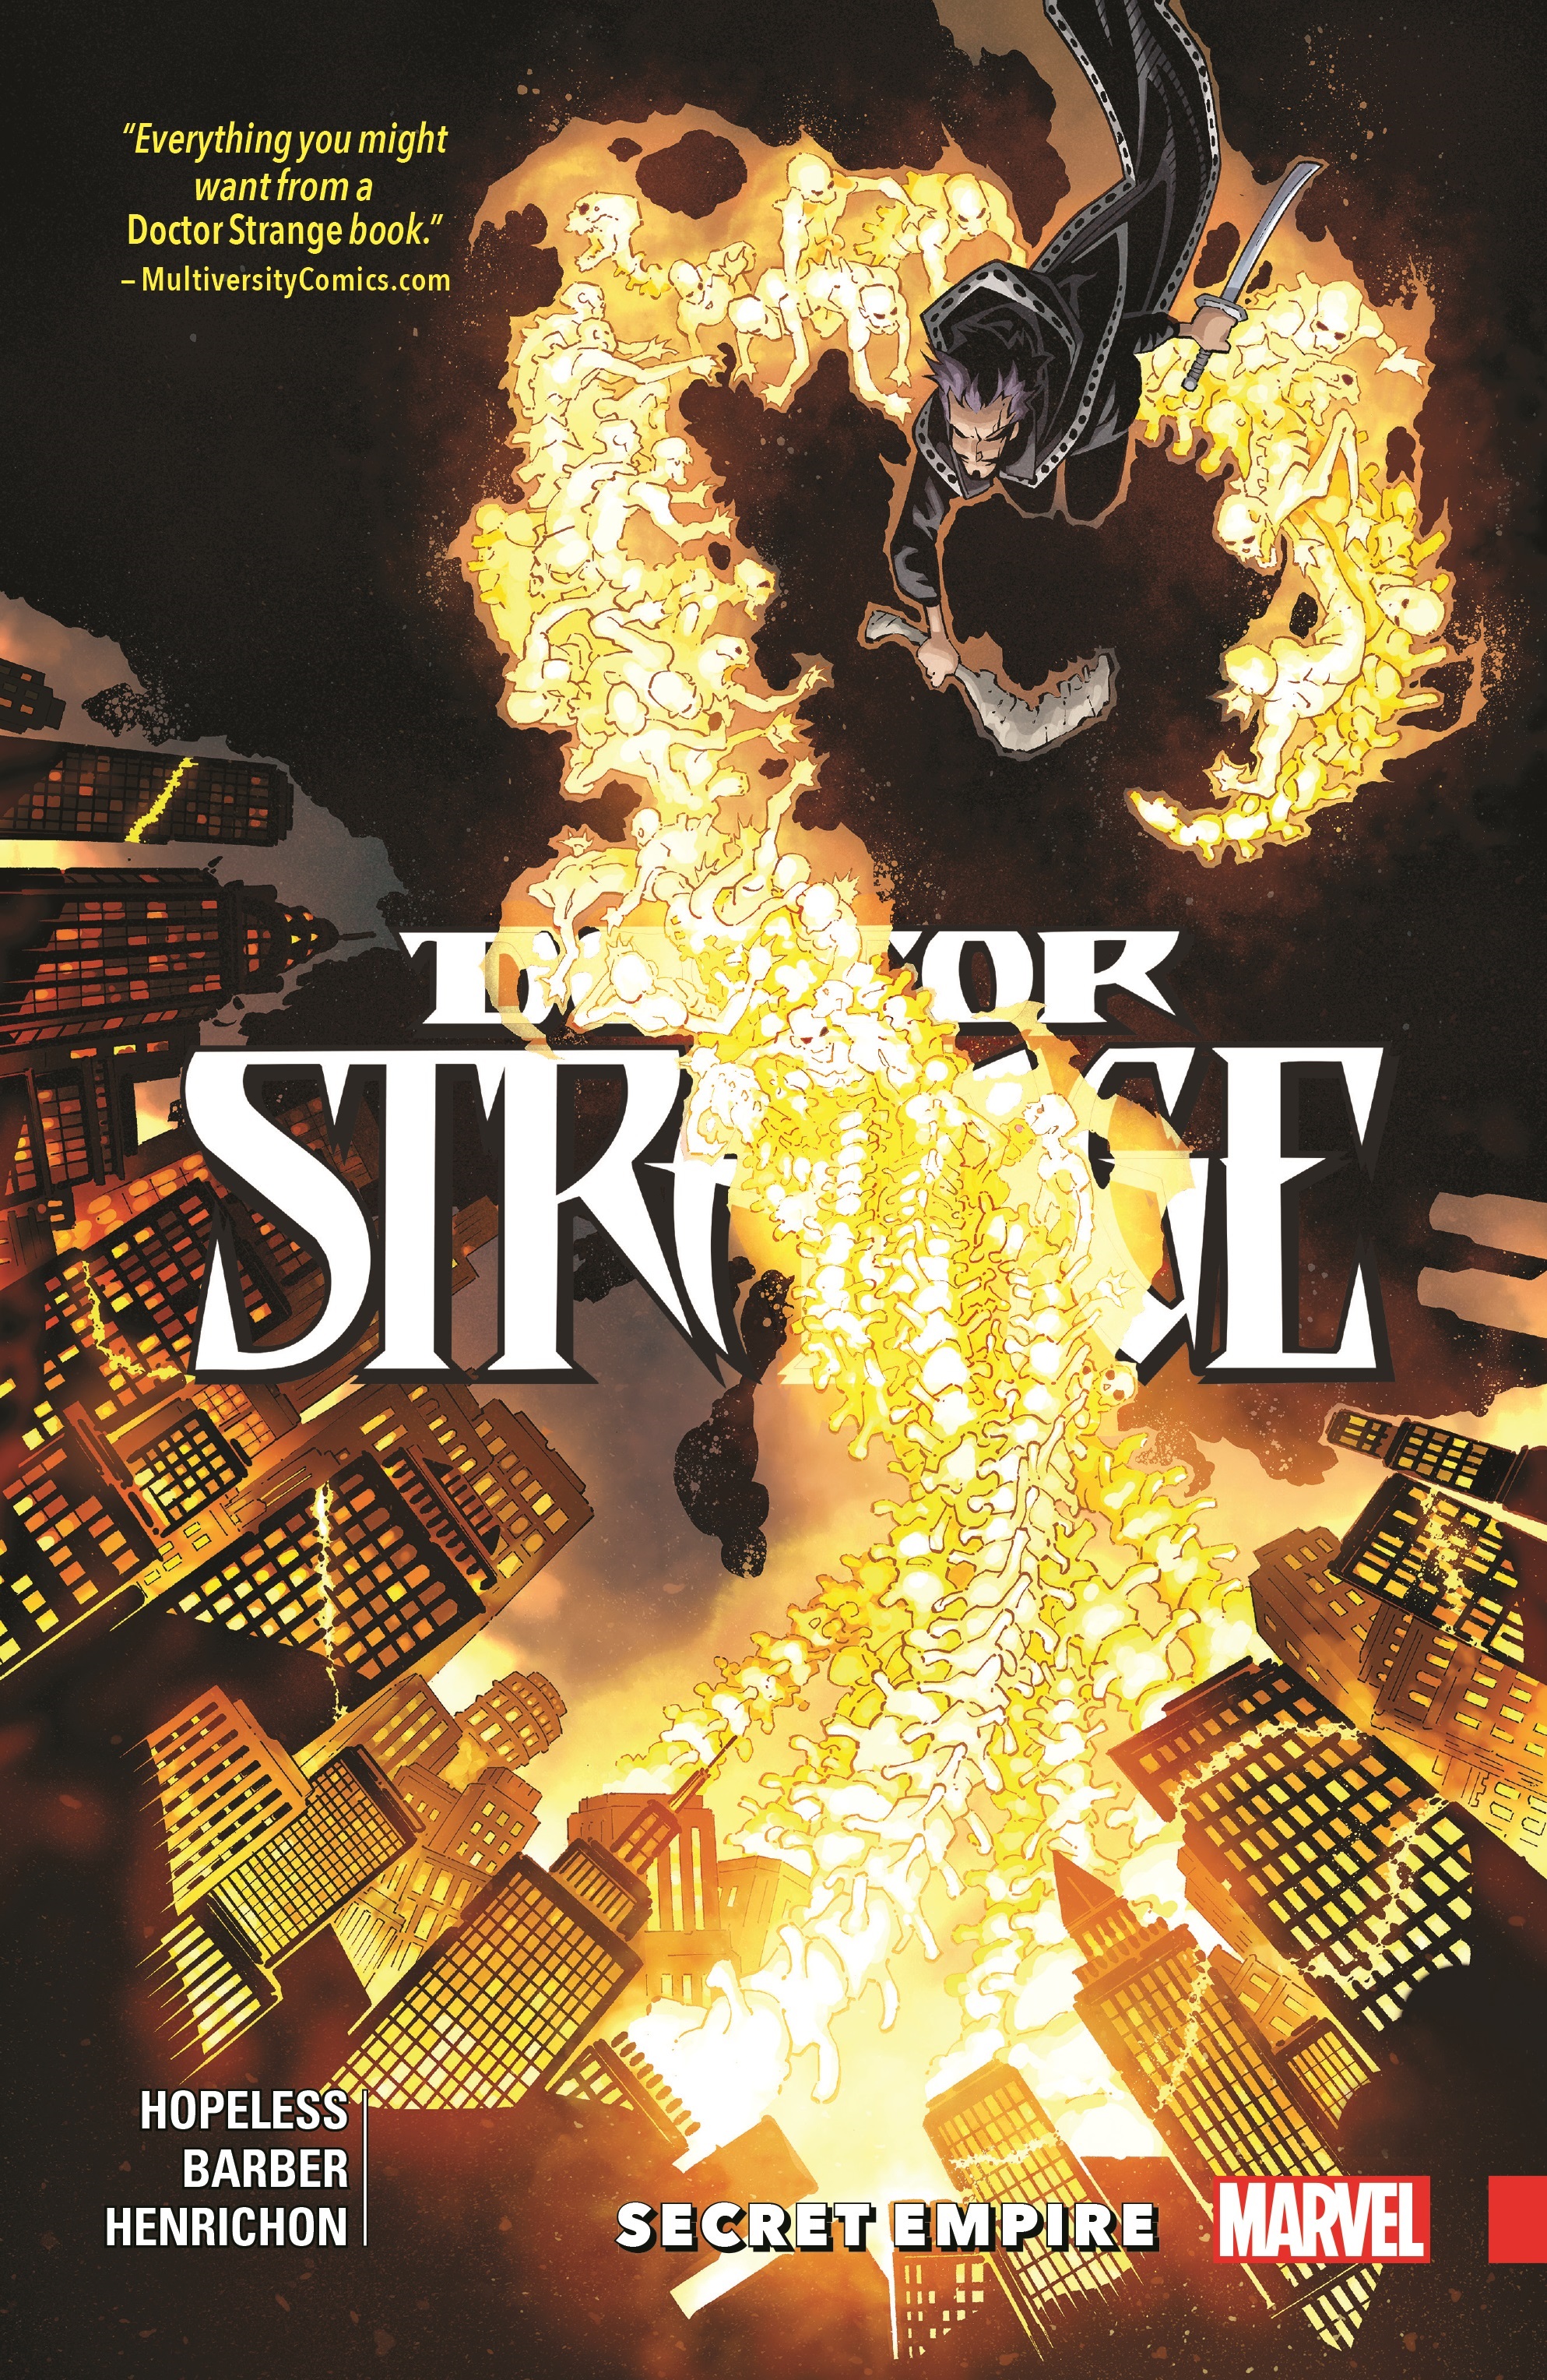 Doctor Strange Vol. 5: Secret Empire (Trade Paperback)